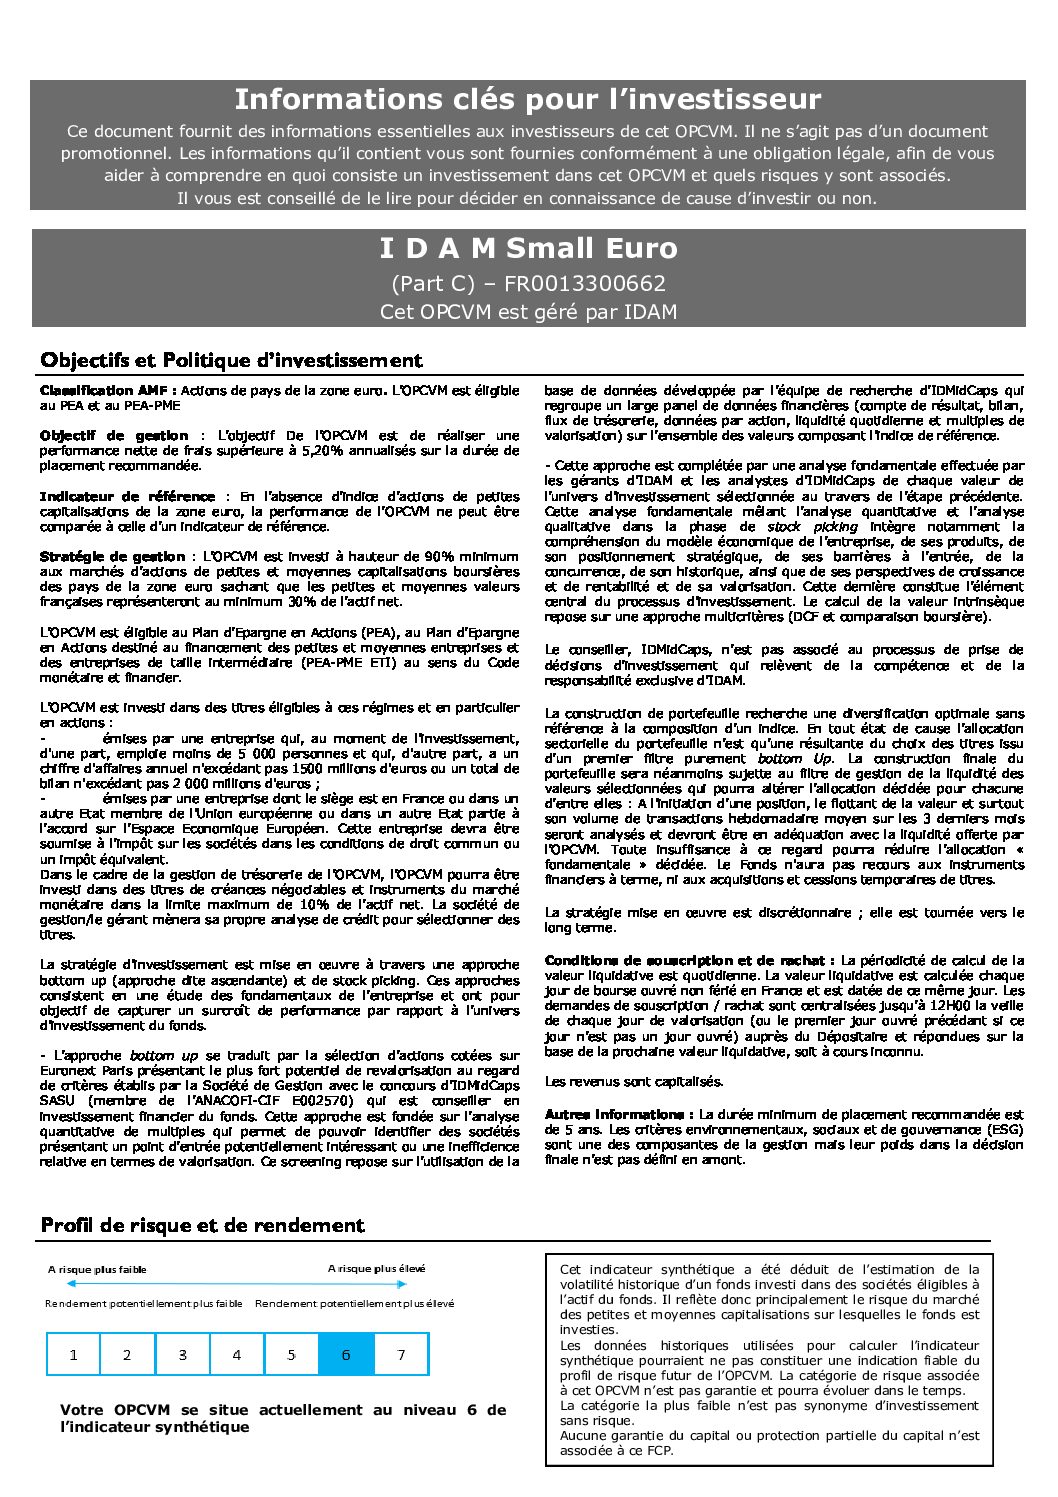 DICI-Part-C-IDAM-SMALL-EURO-4-pdf